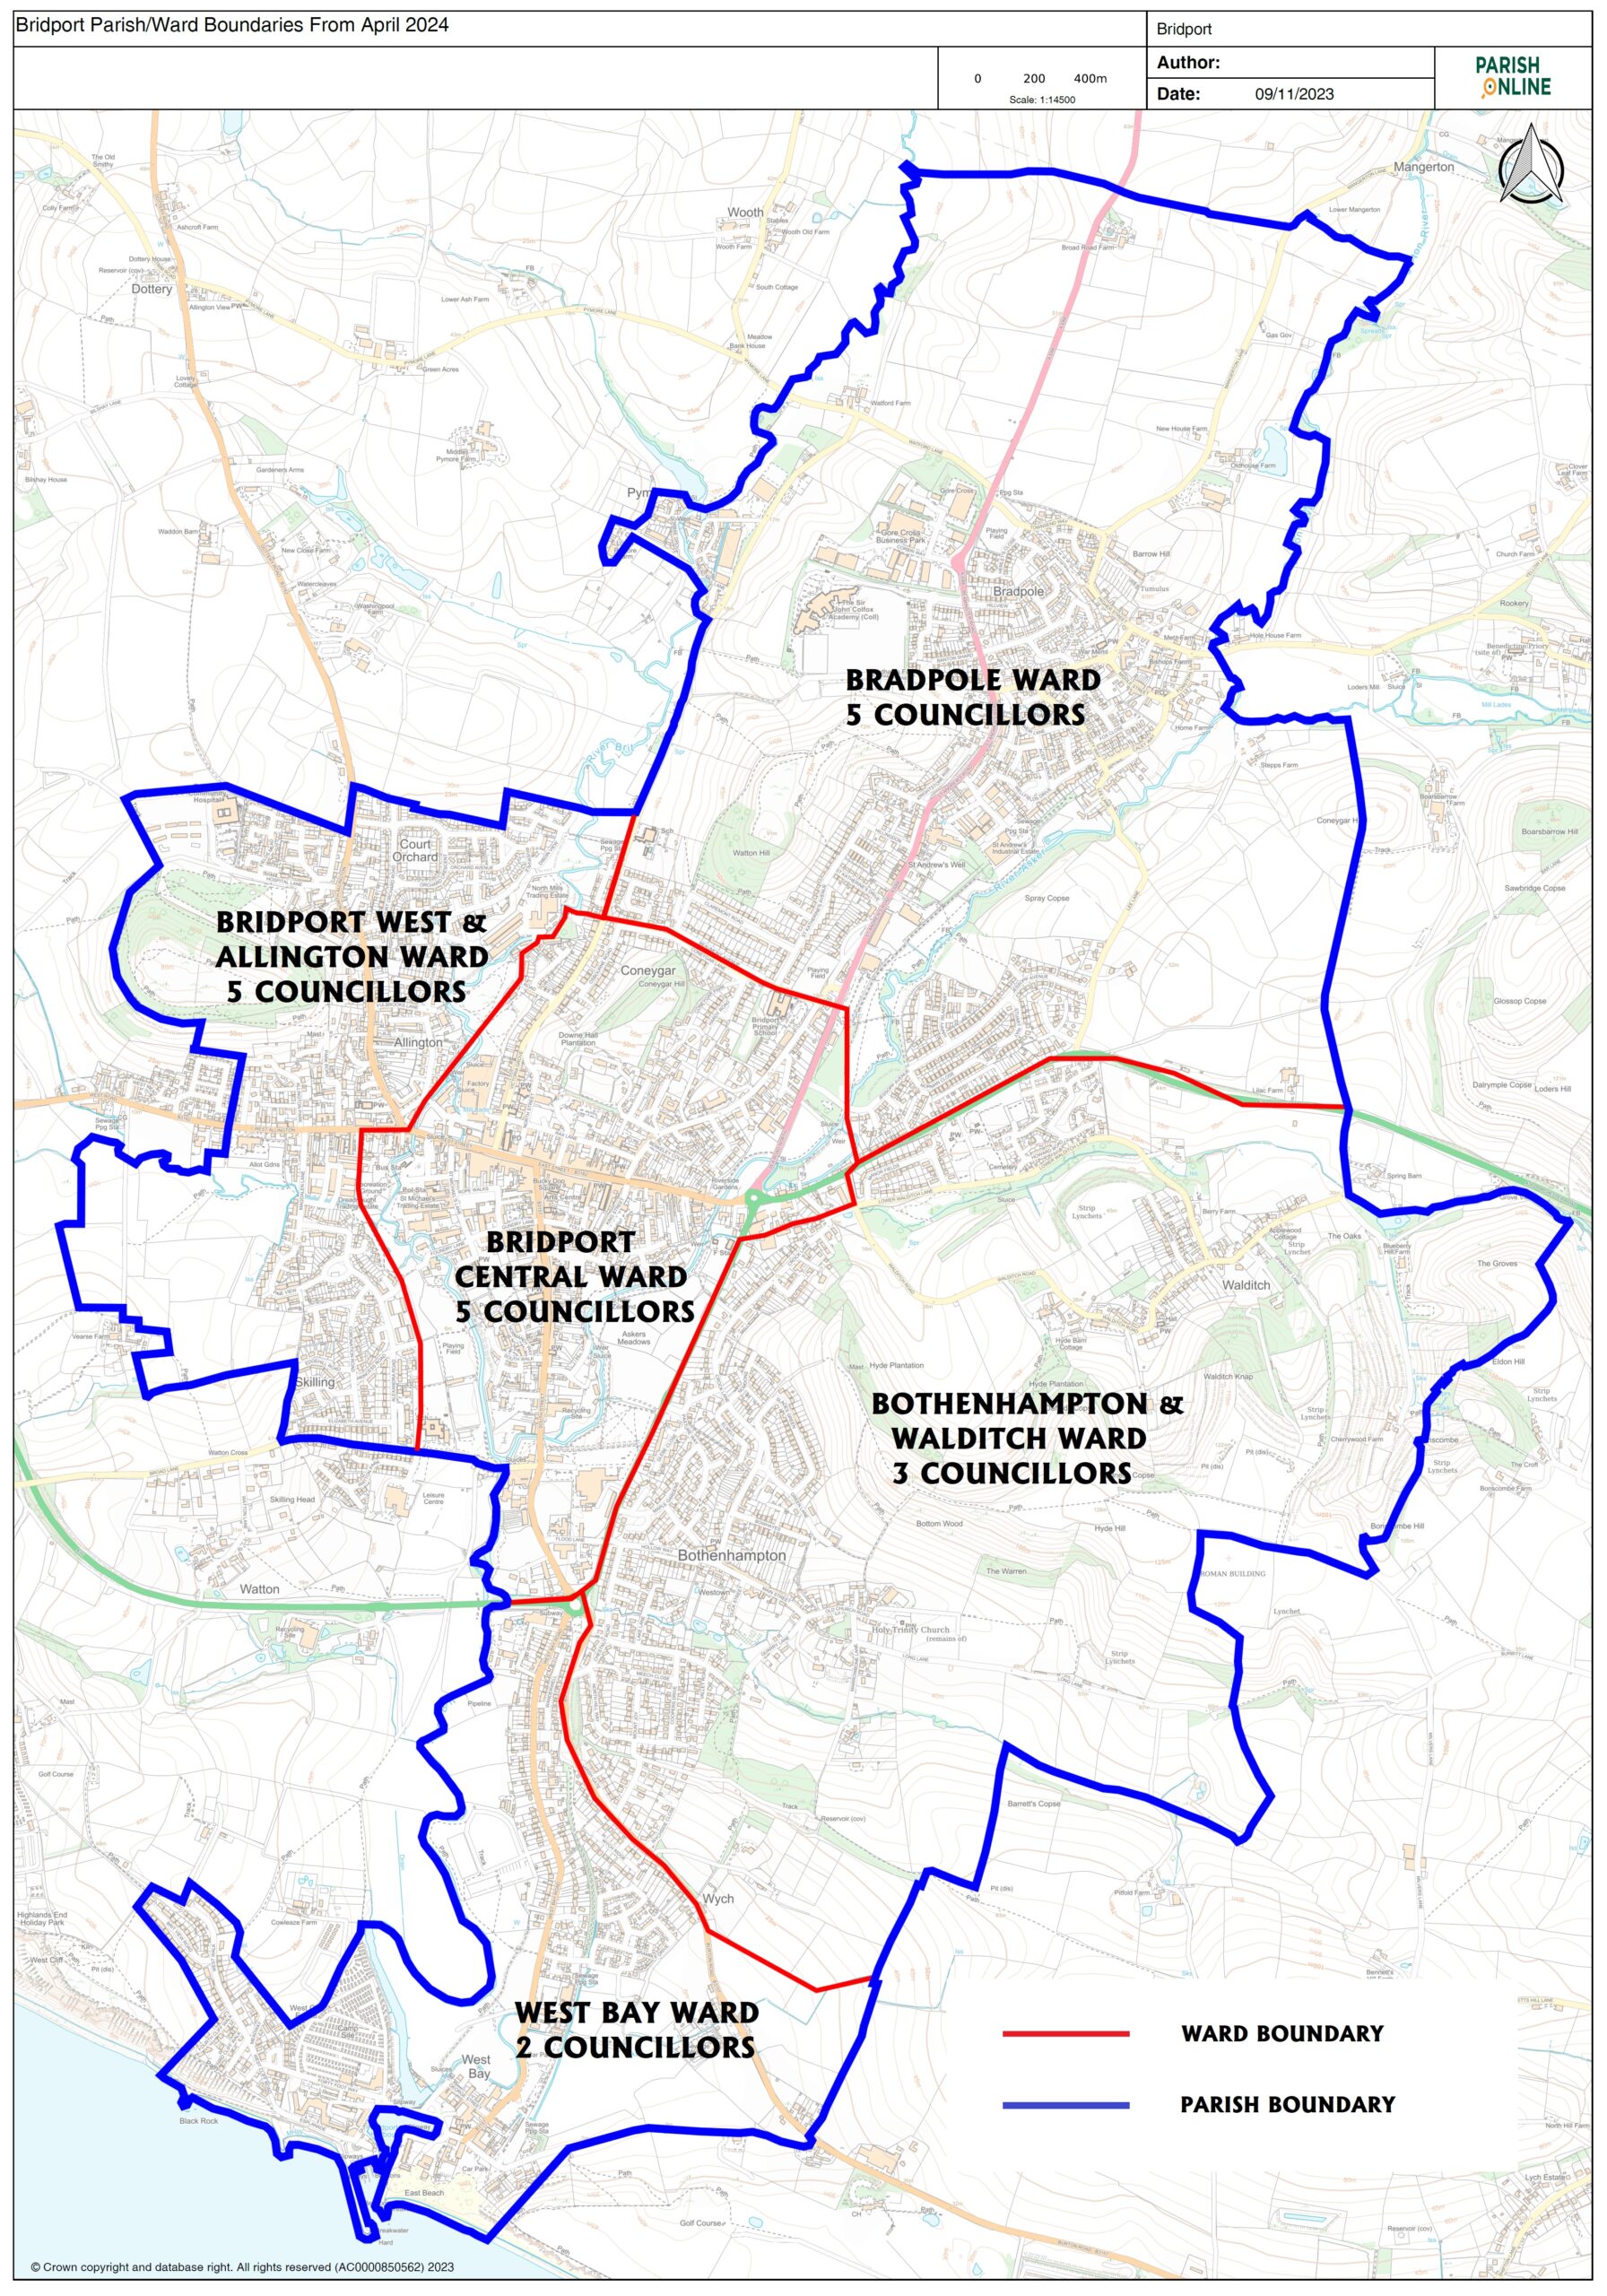 Bridport Town Council Boundaries From 1 April 2024